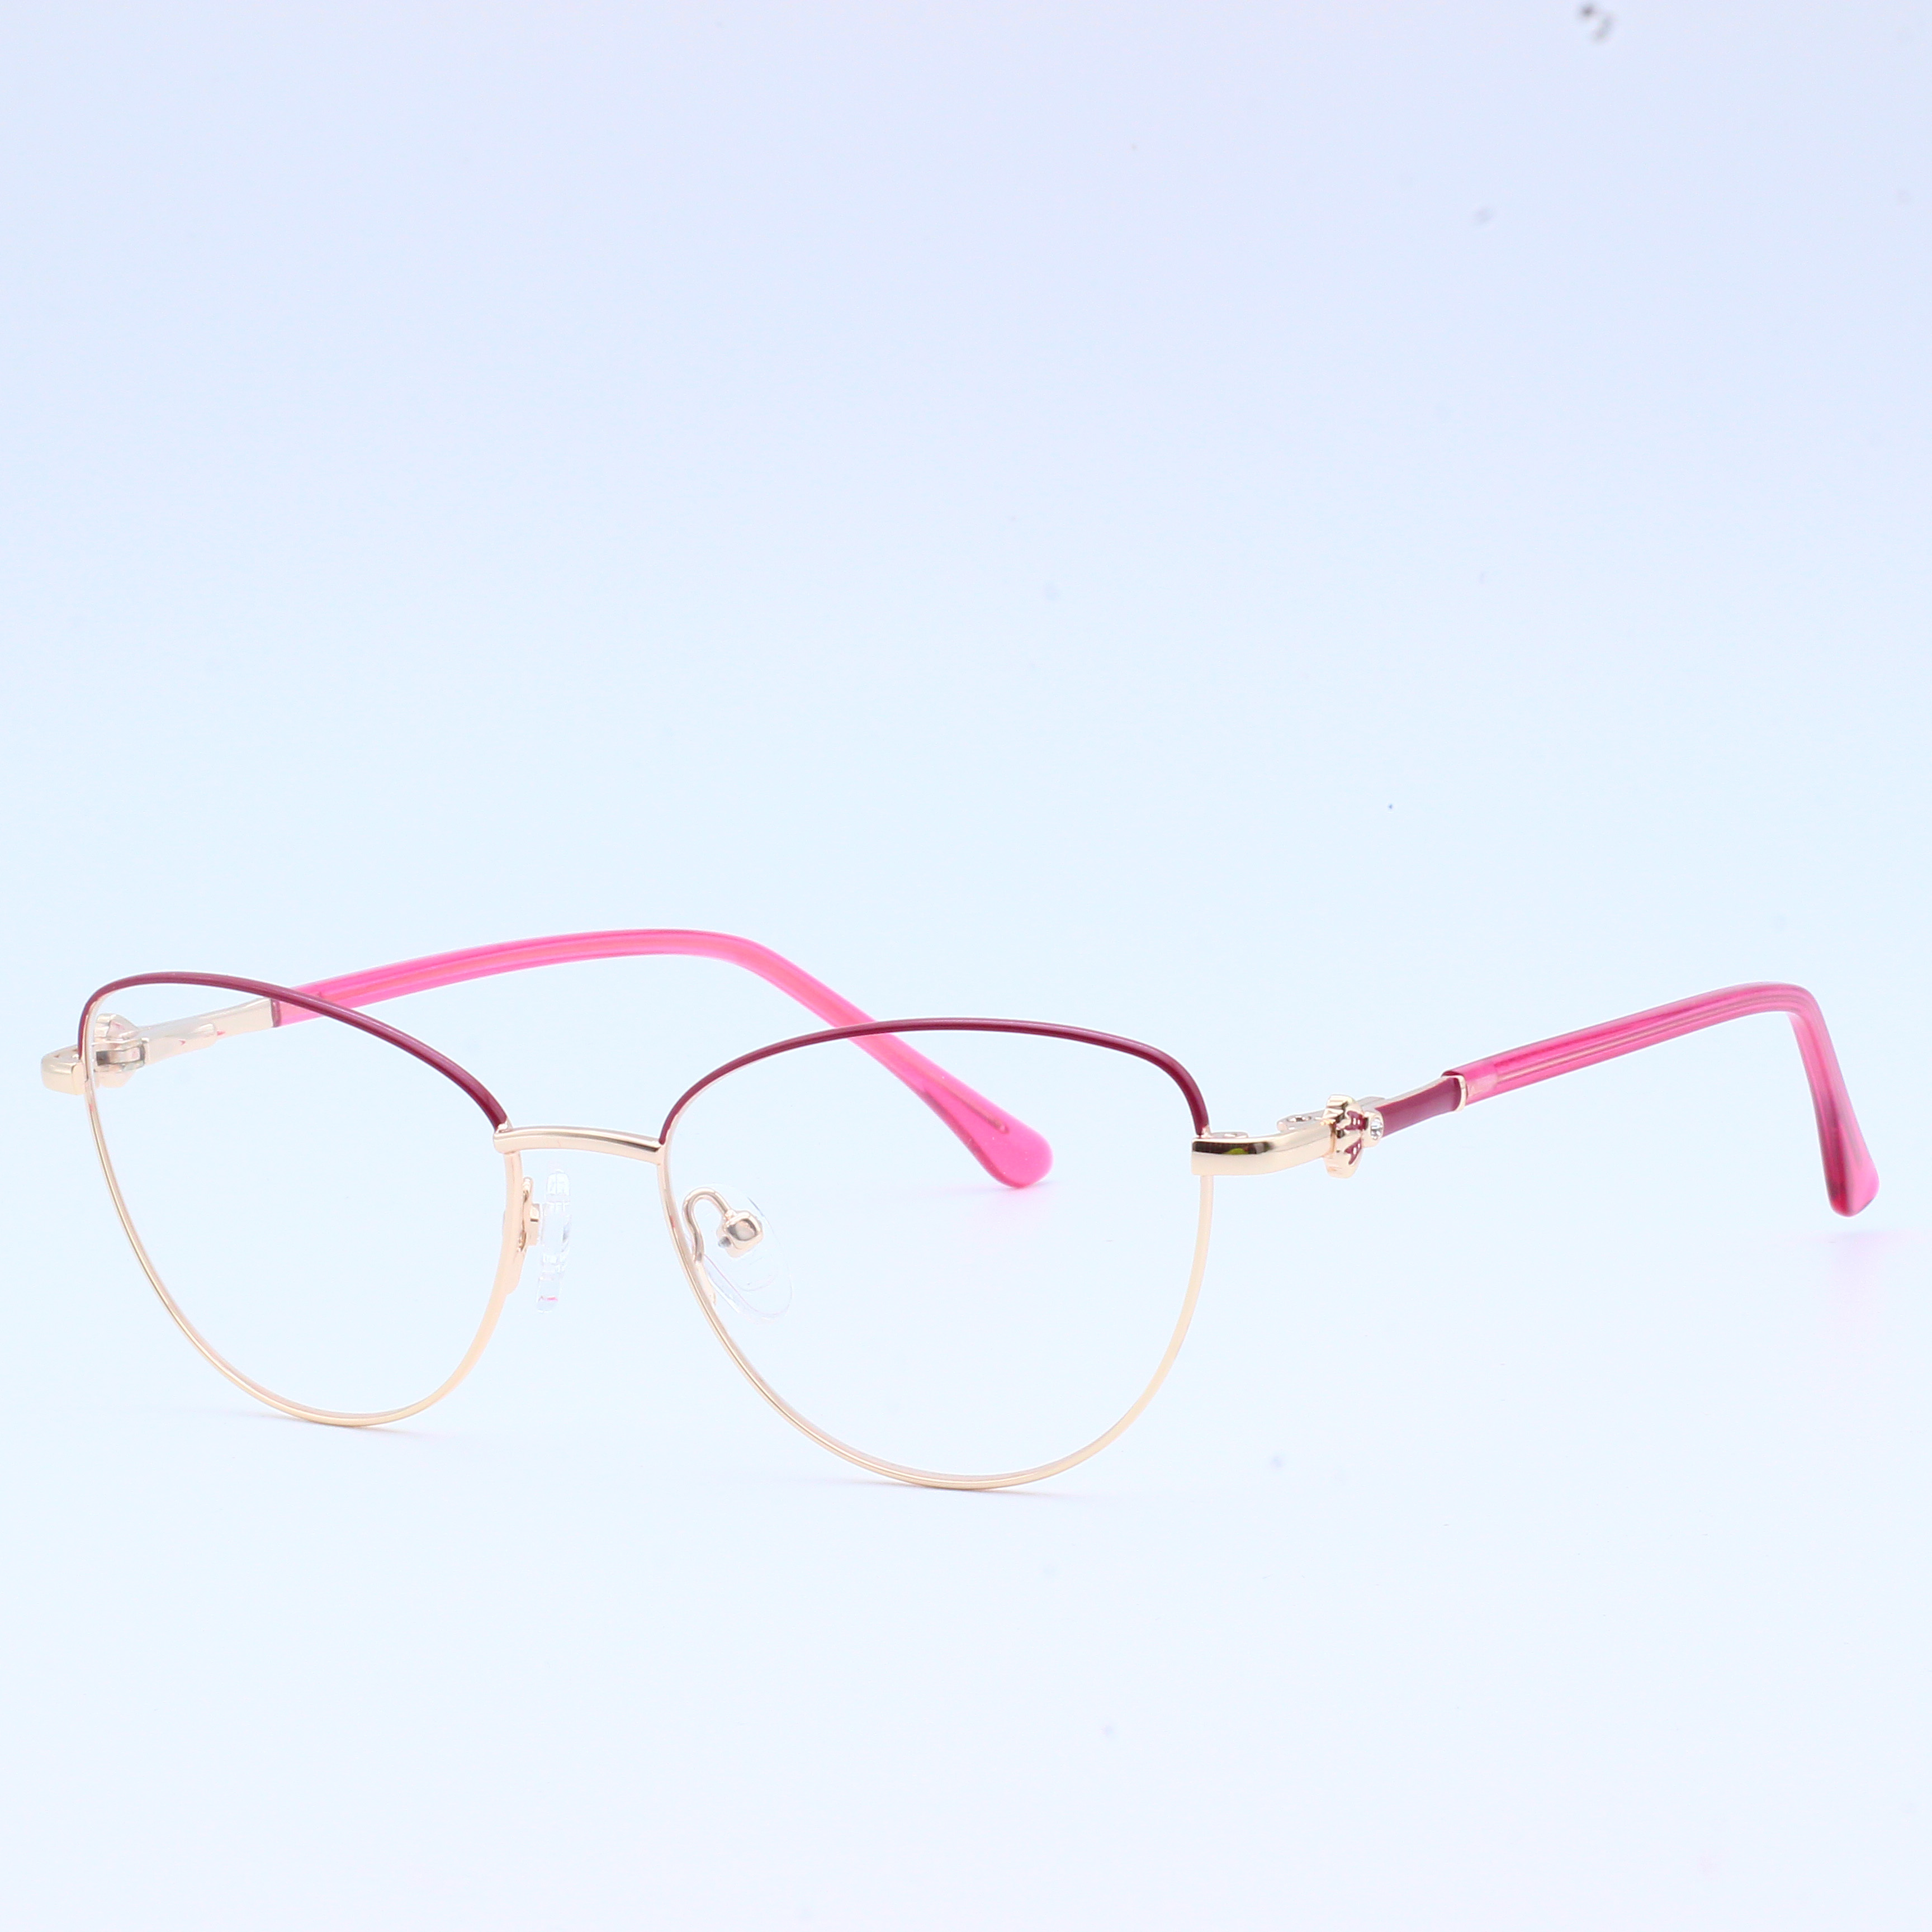 Metal Spring Hinge Cat Eye Glasses Frames (8)